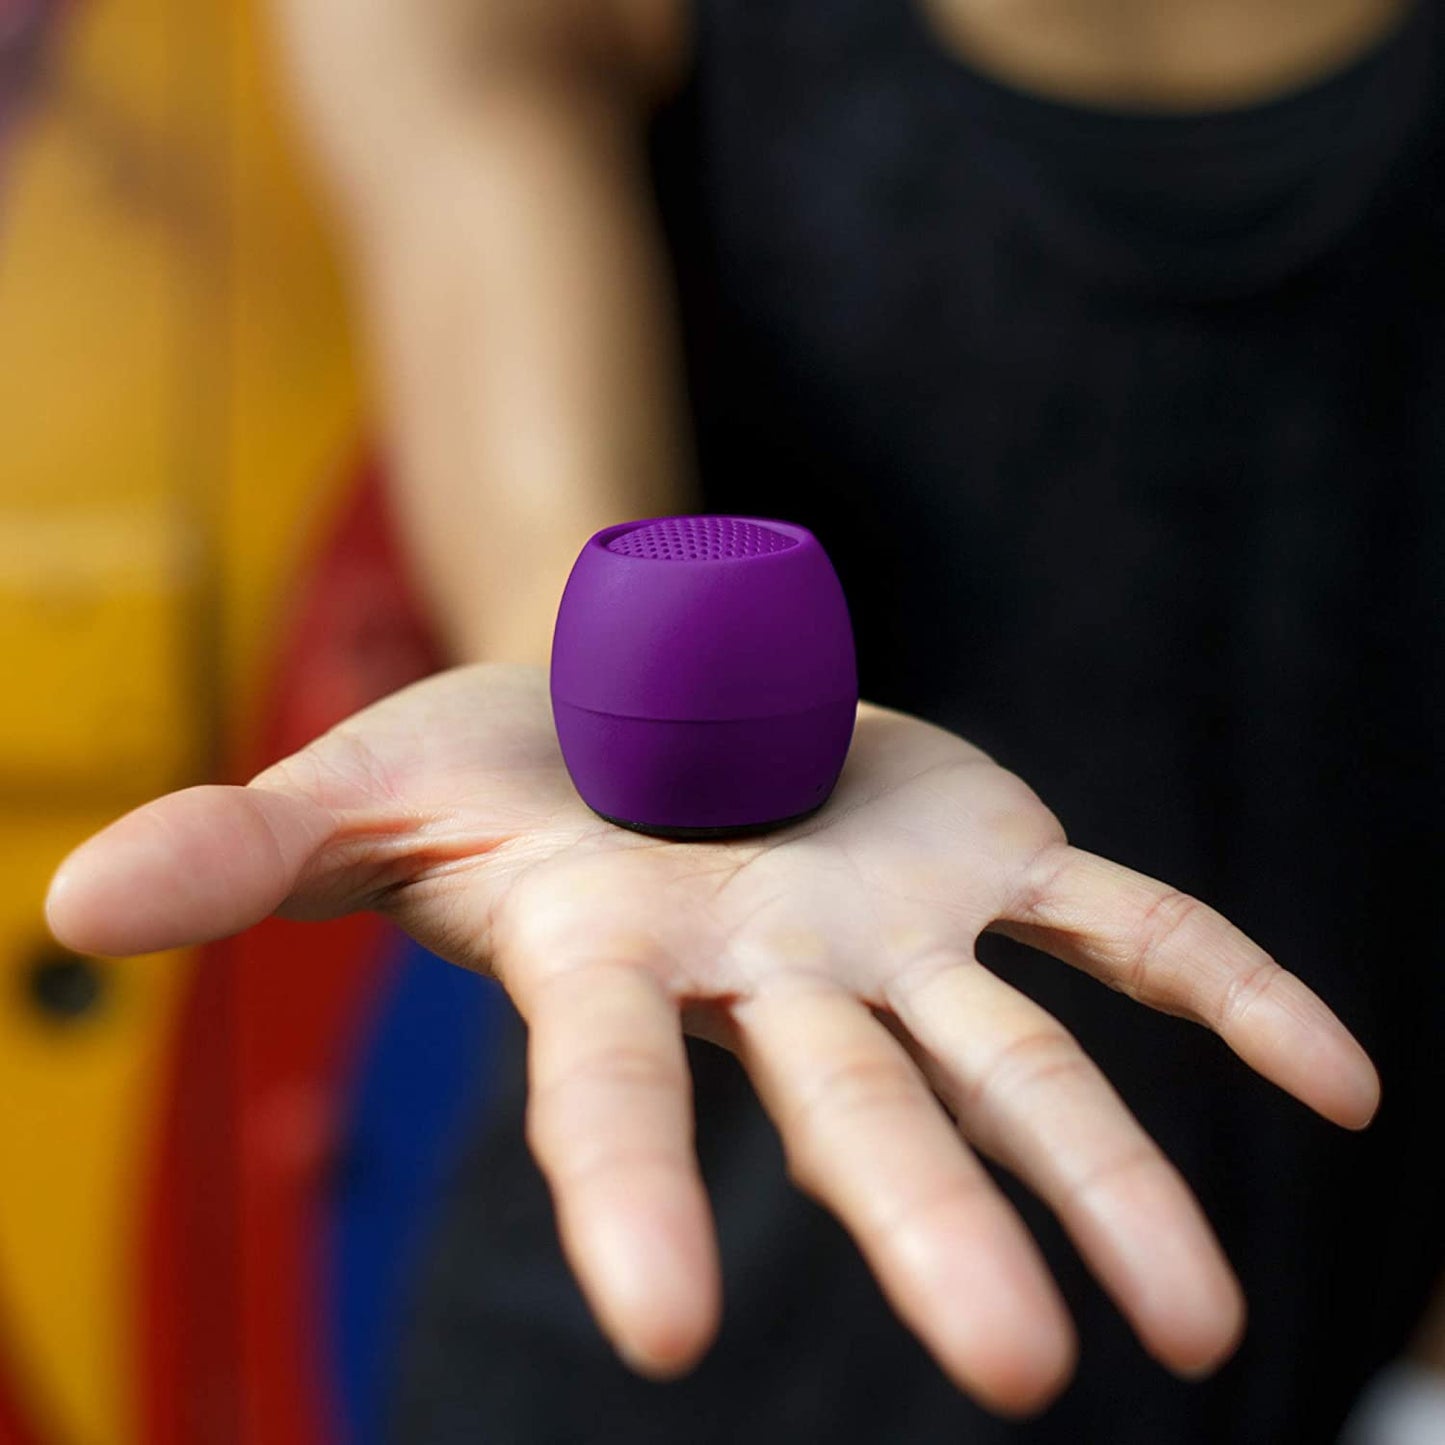 ZERO Mini Wireless Bluetooth Speaker - Purple